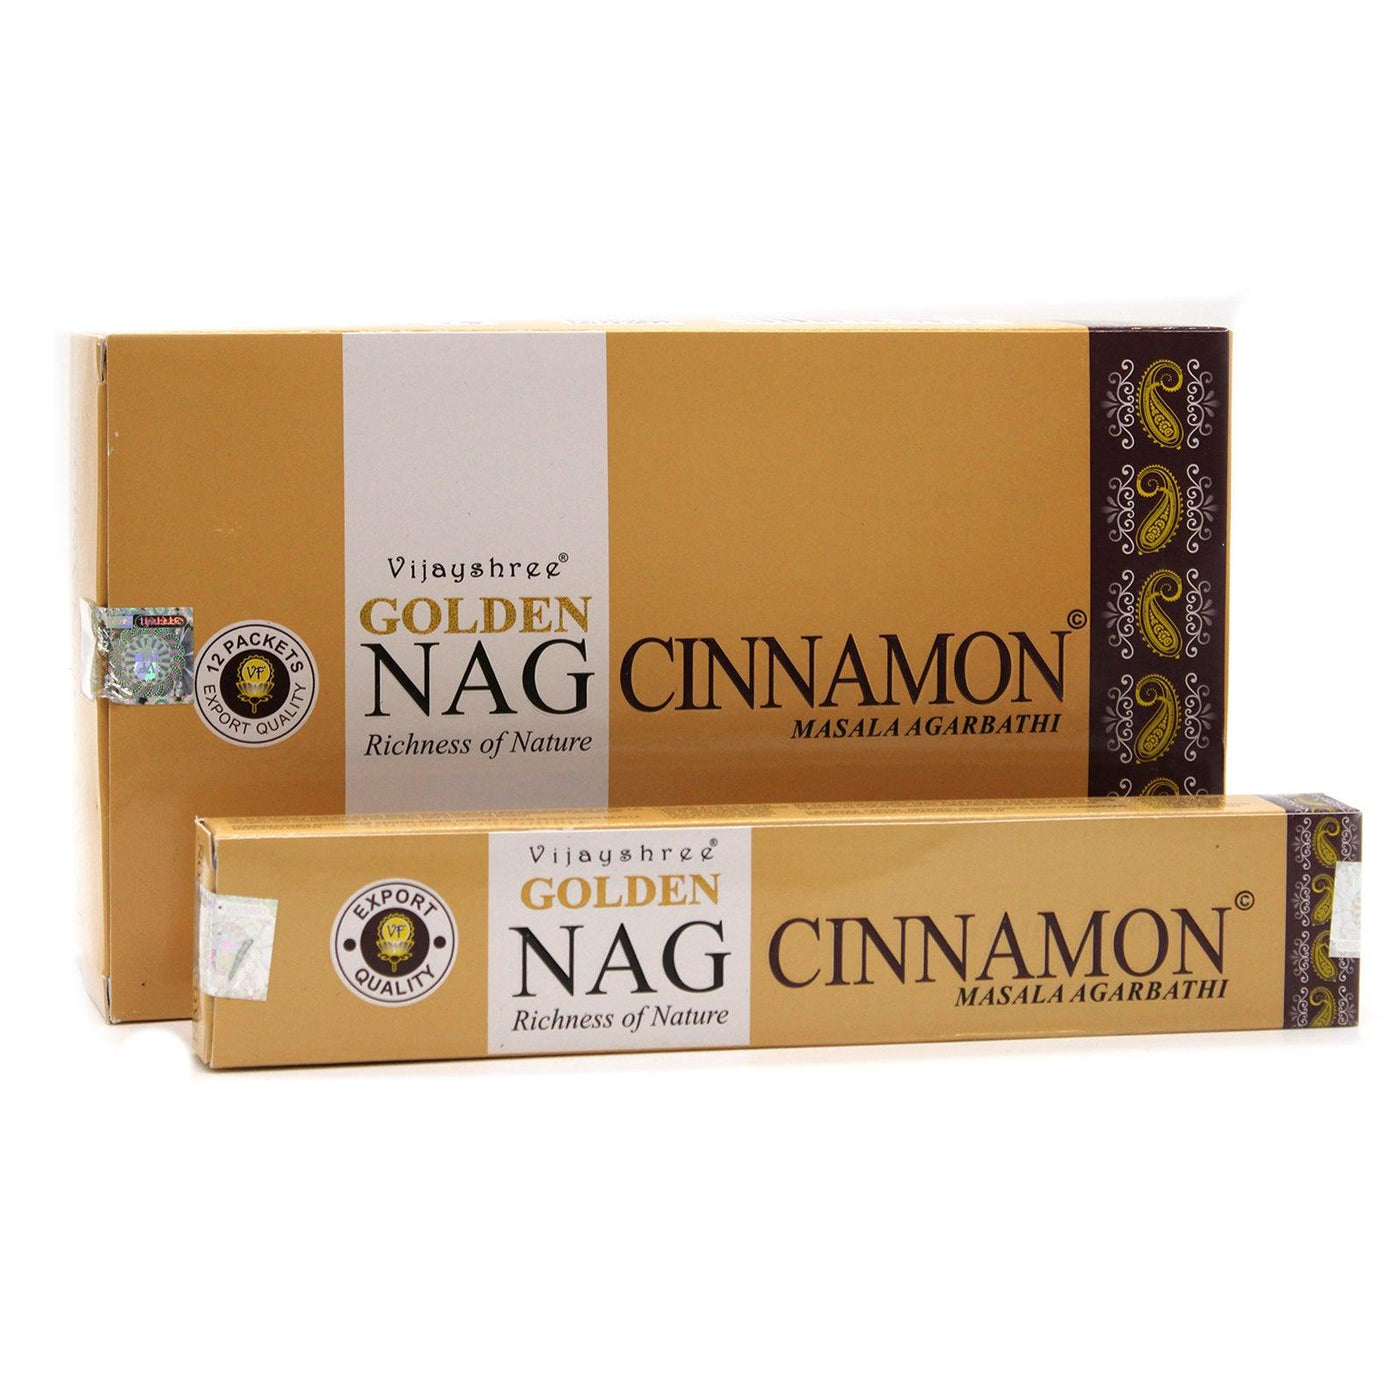 Golden Nag Champa Incense Sticks - Cinamon.